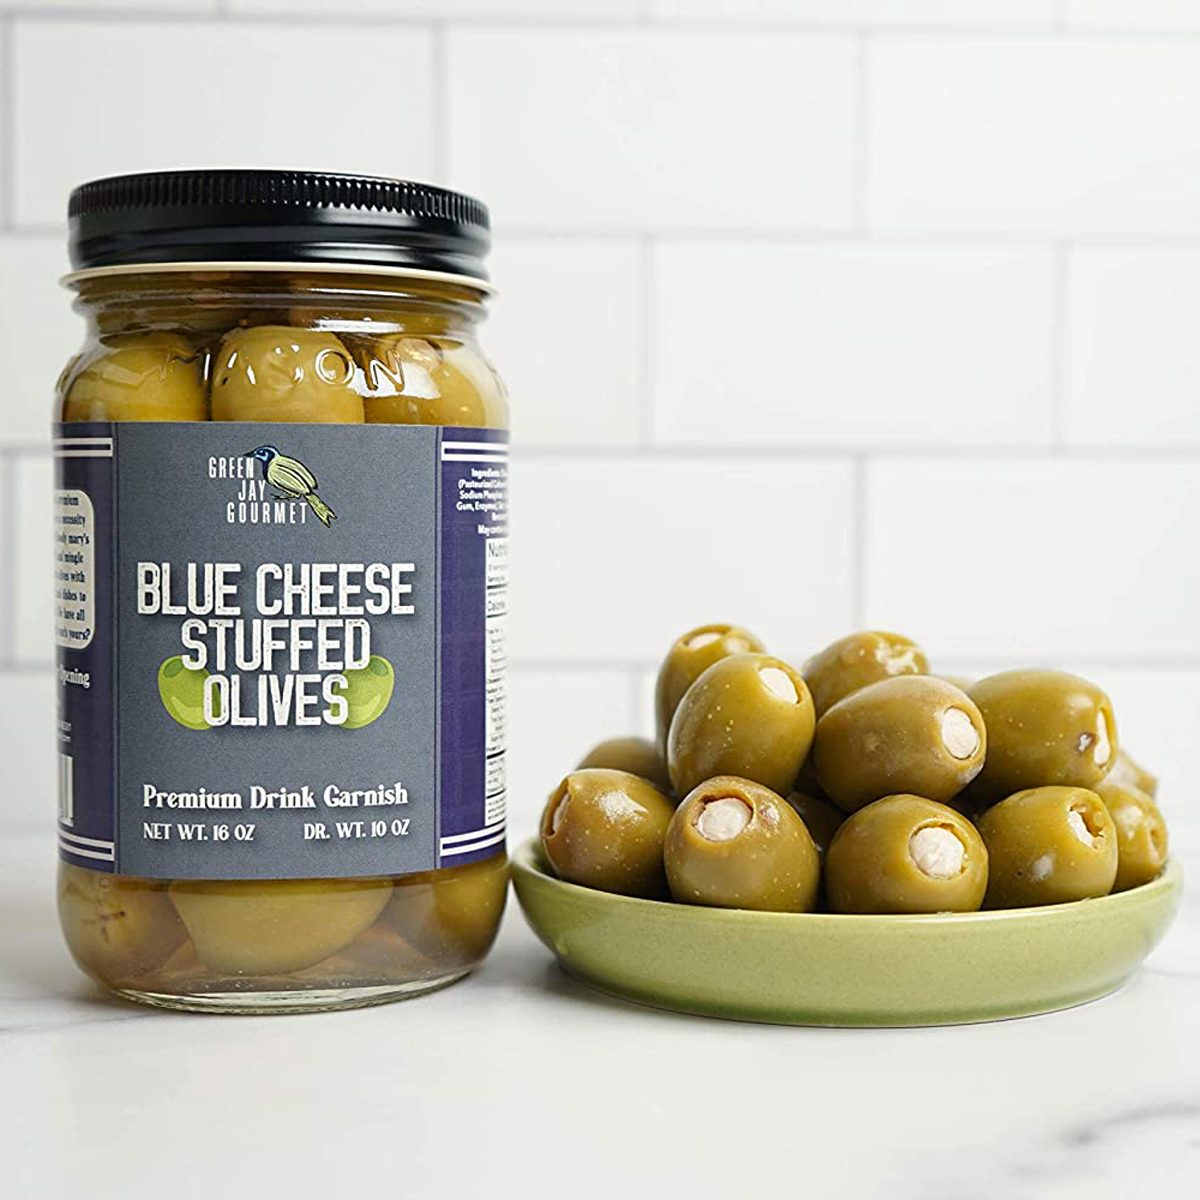 Green Jay Gourmet Blue Cheese Stuffed Olives Ecomm Amazon.com